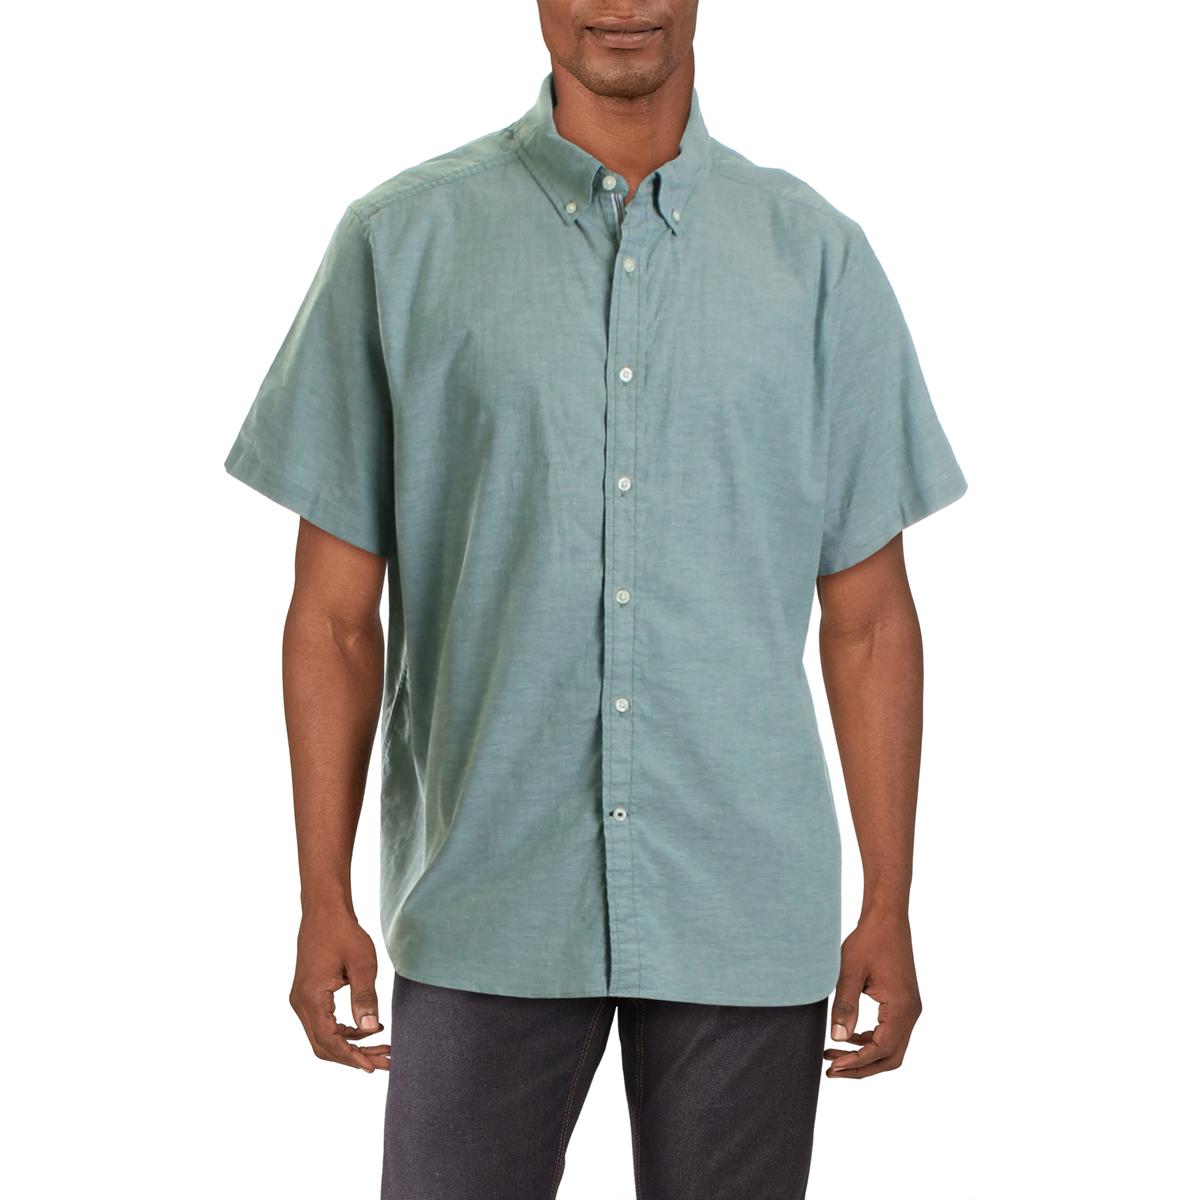 Nautica Mens Cotton Classic-Fit Stretch Casual Shirt BHFO 0279 | eBay